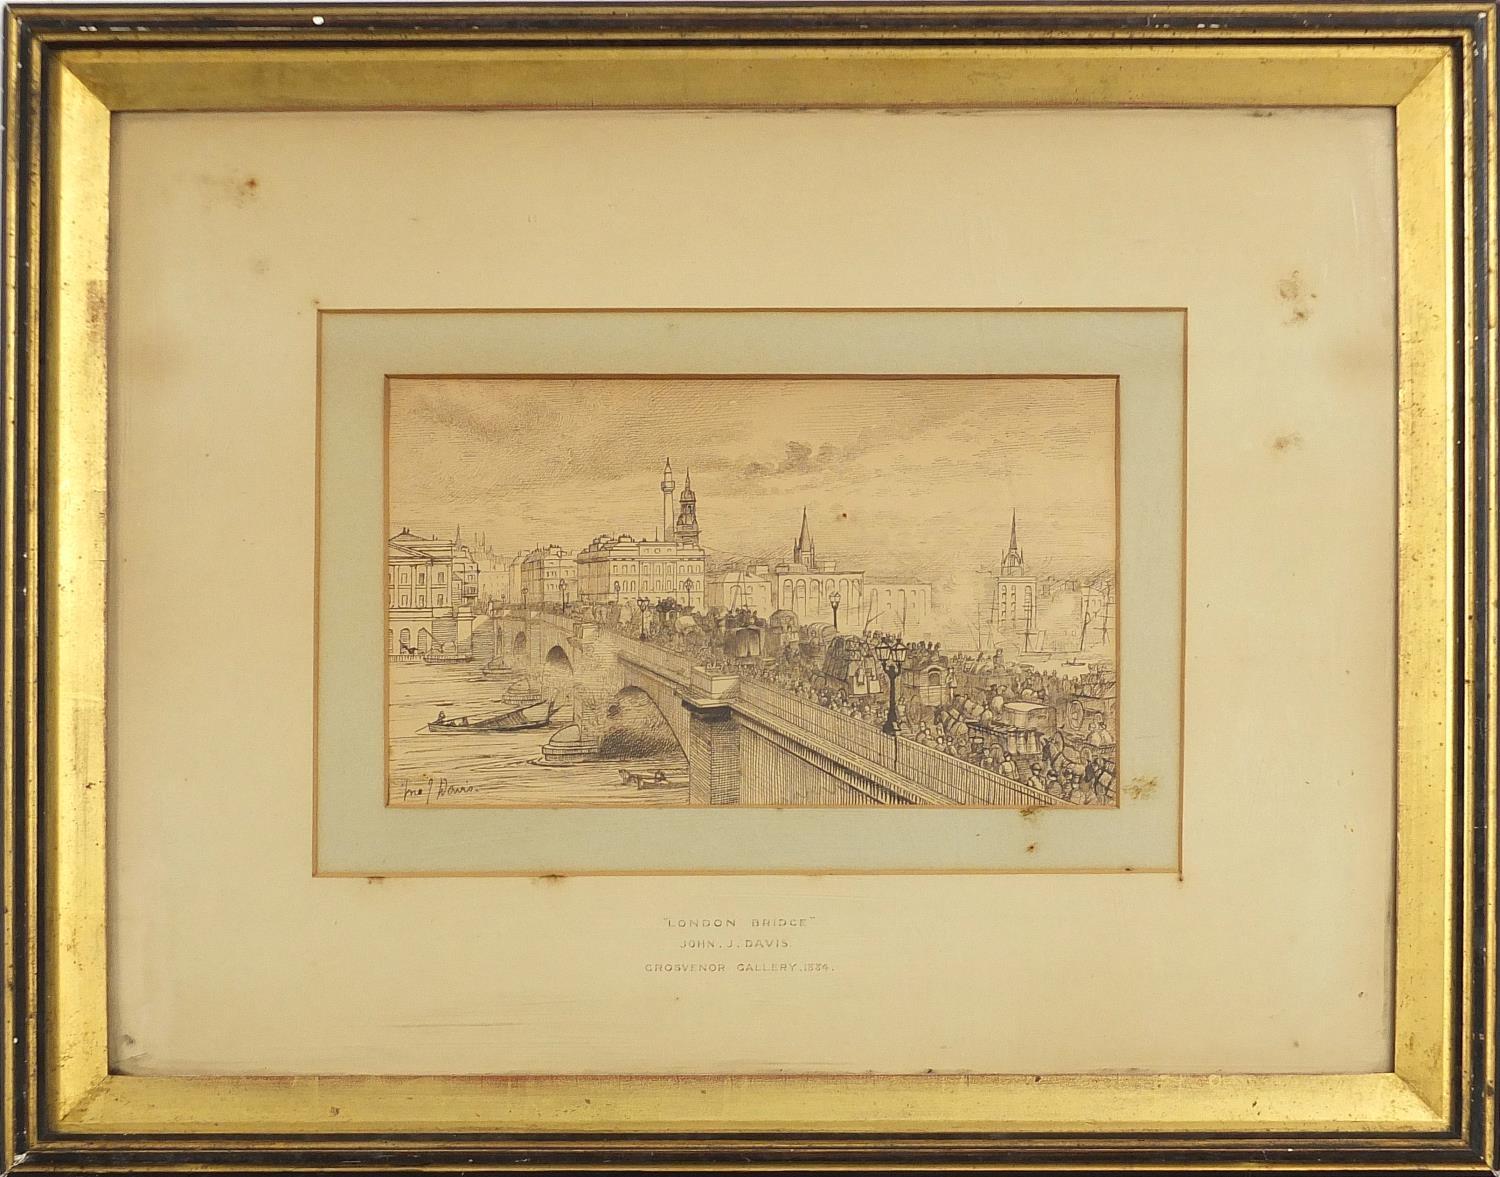 John J Davis, London Bridge, early 19th century ink drawing inscribed to the mount Grosvenor Gallery - Image 2 of 5